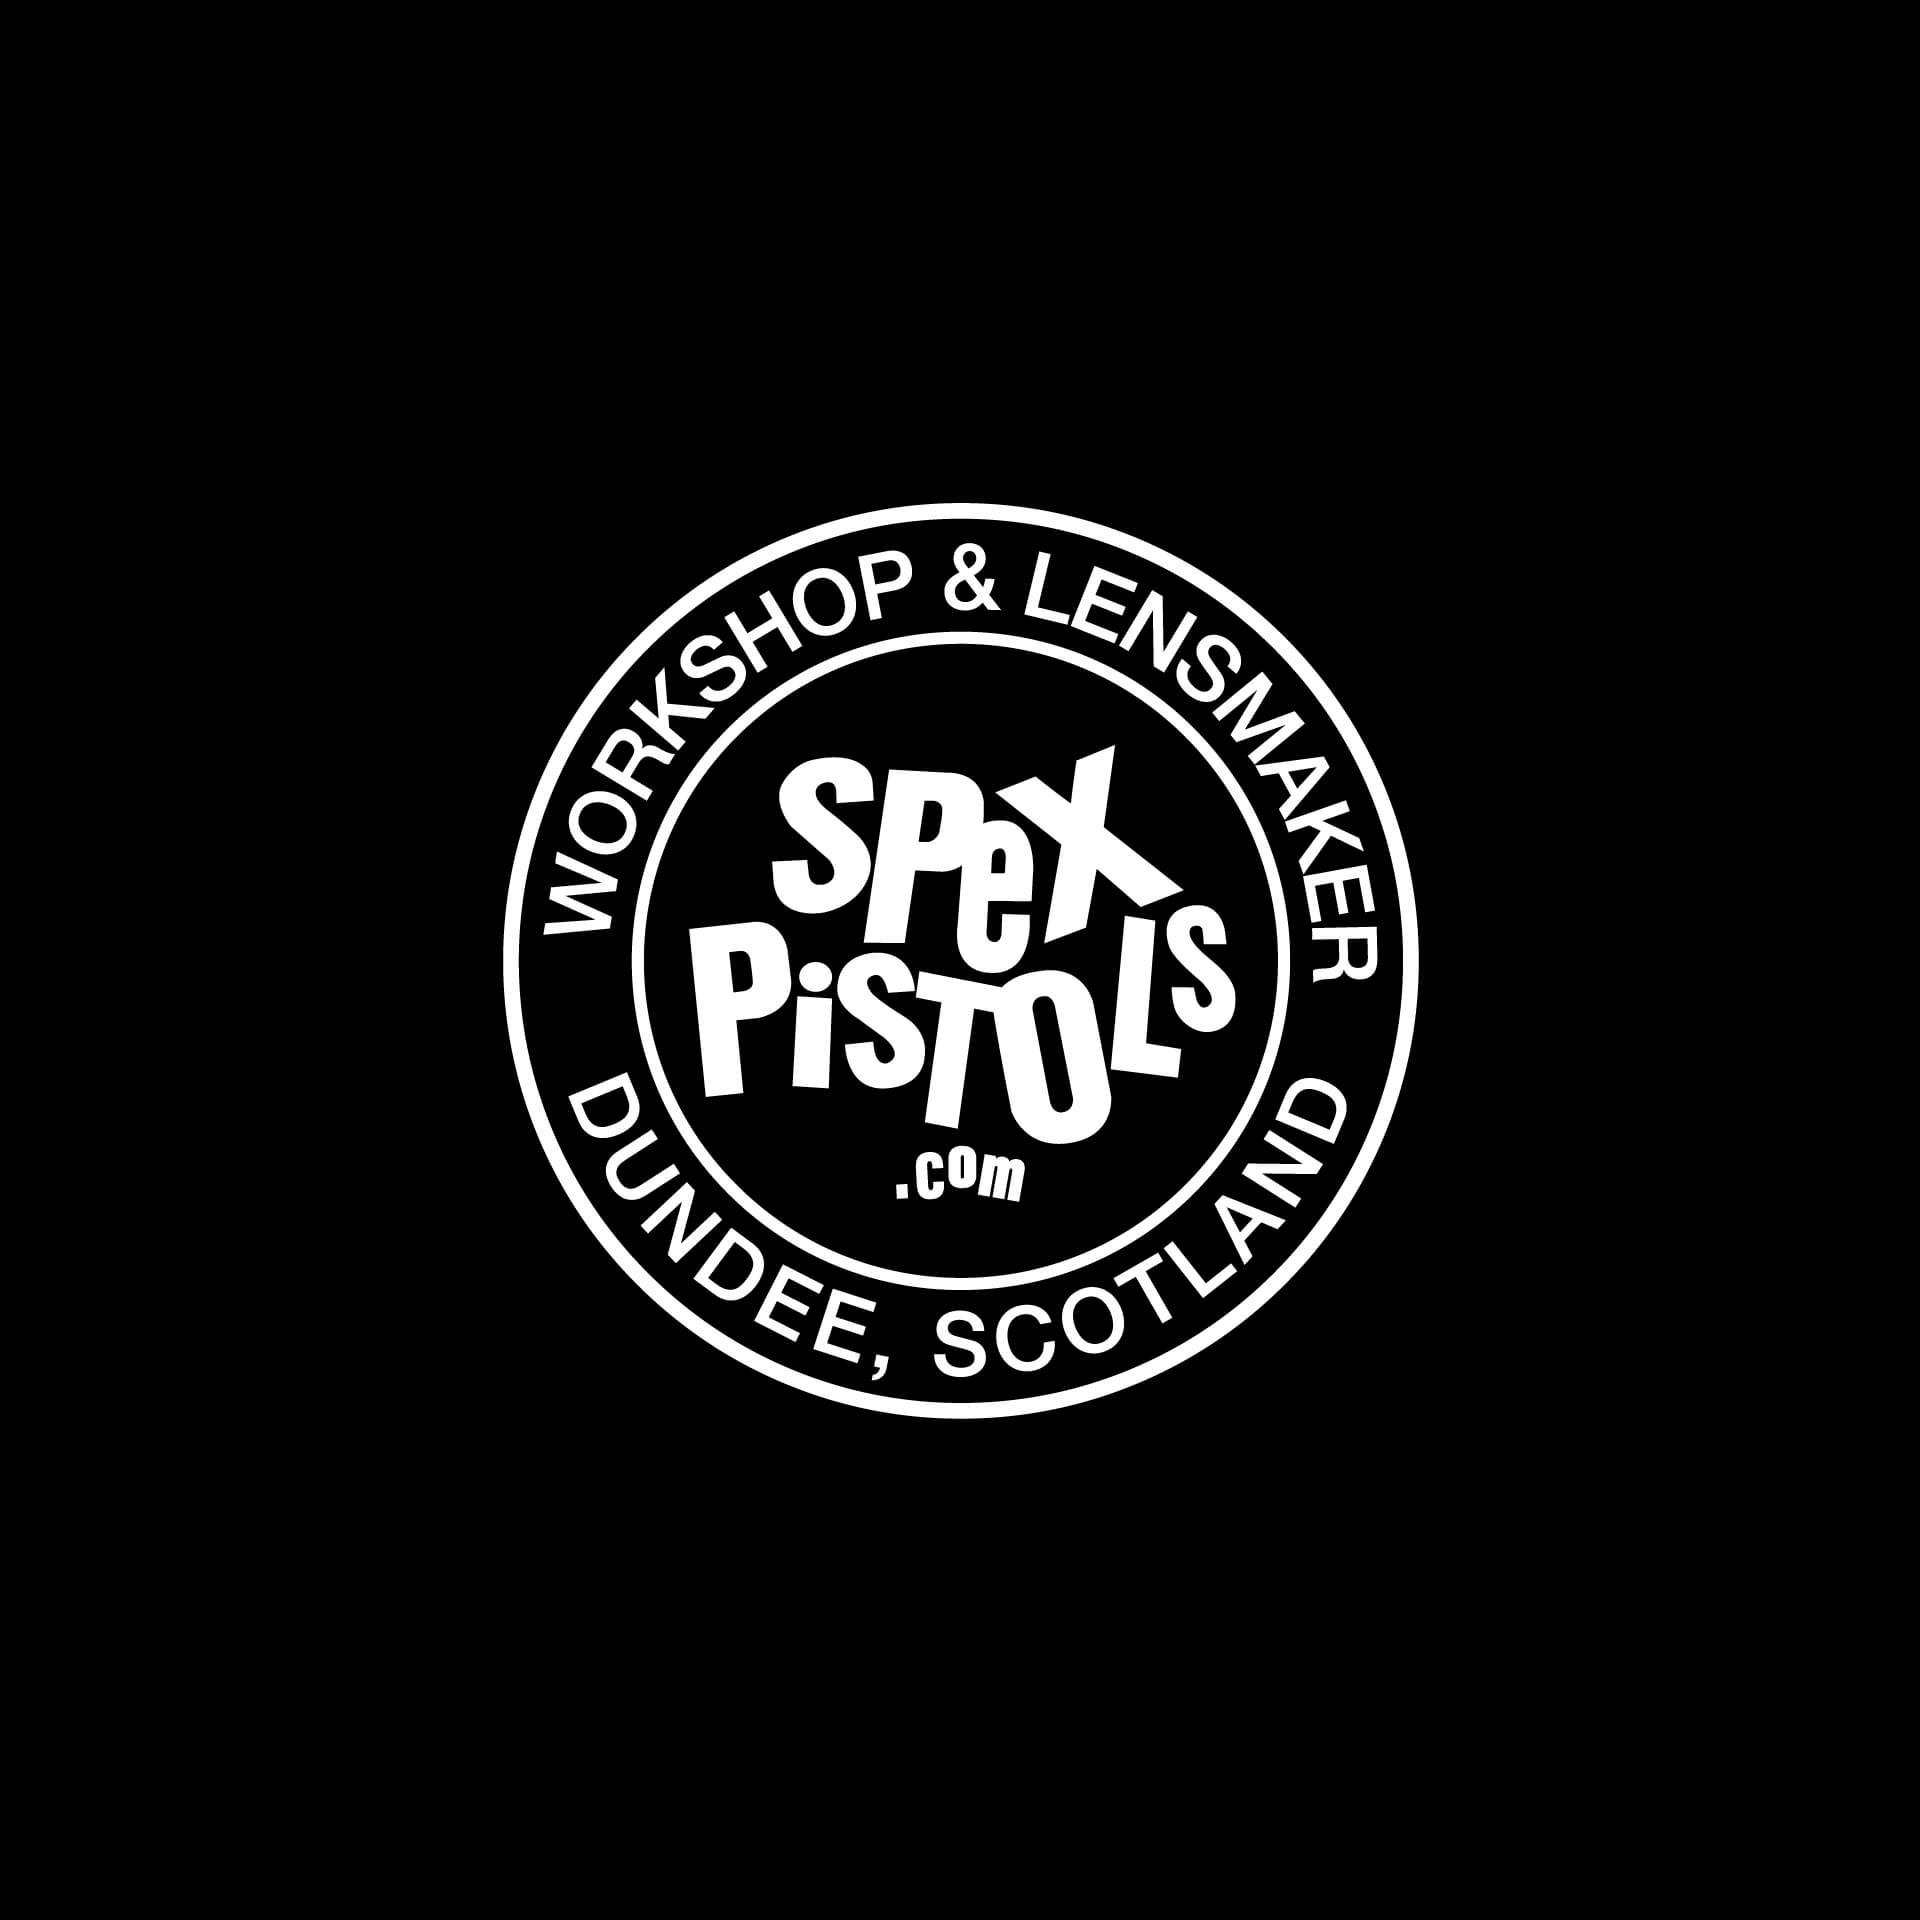 Black and white roundel Spex Pistols logo.